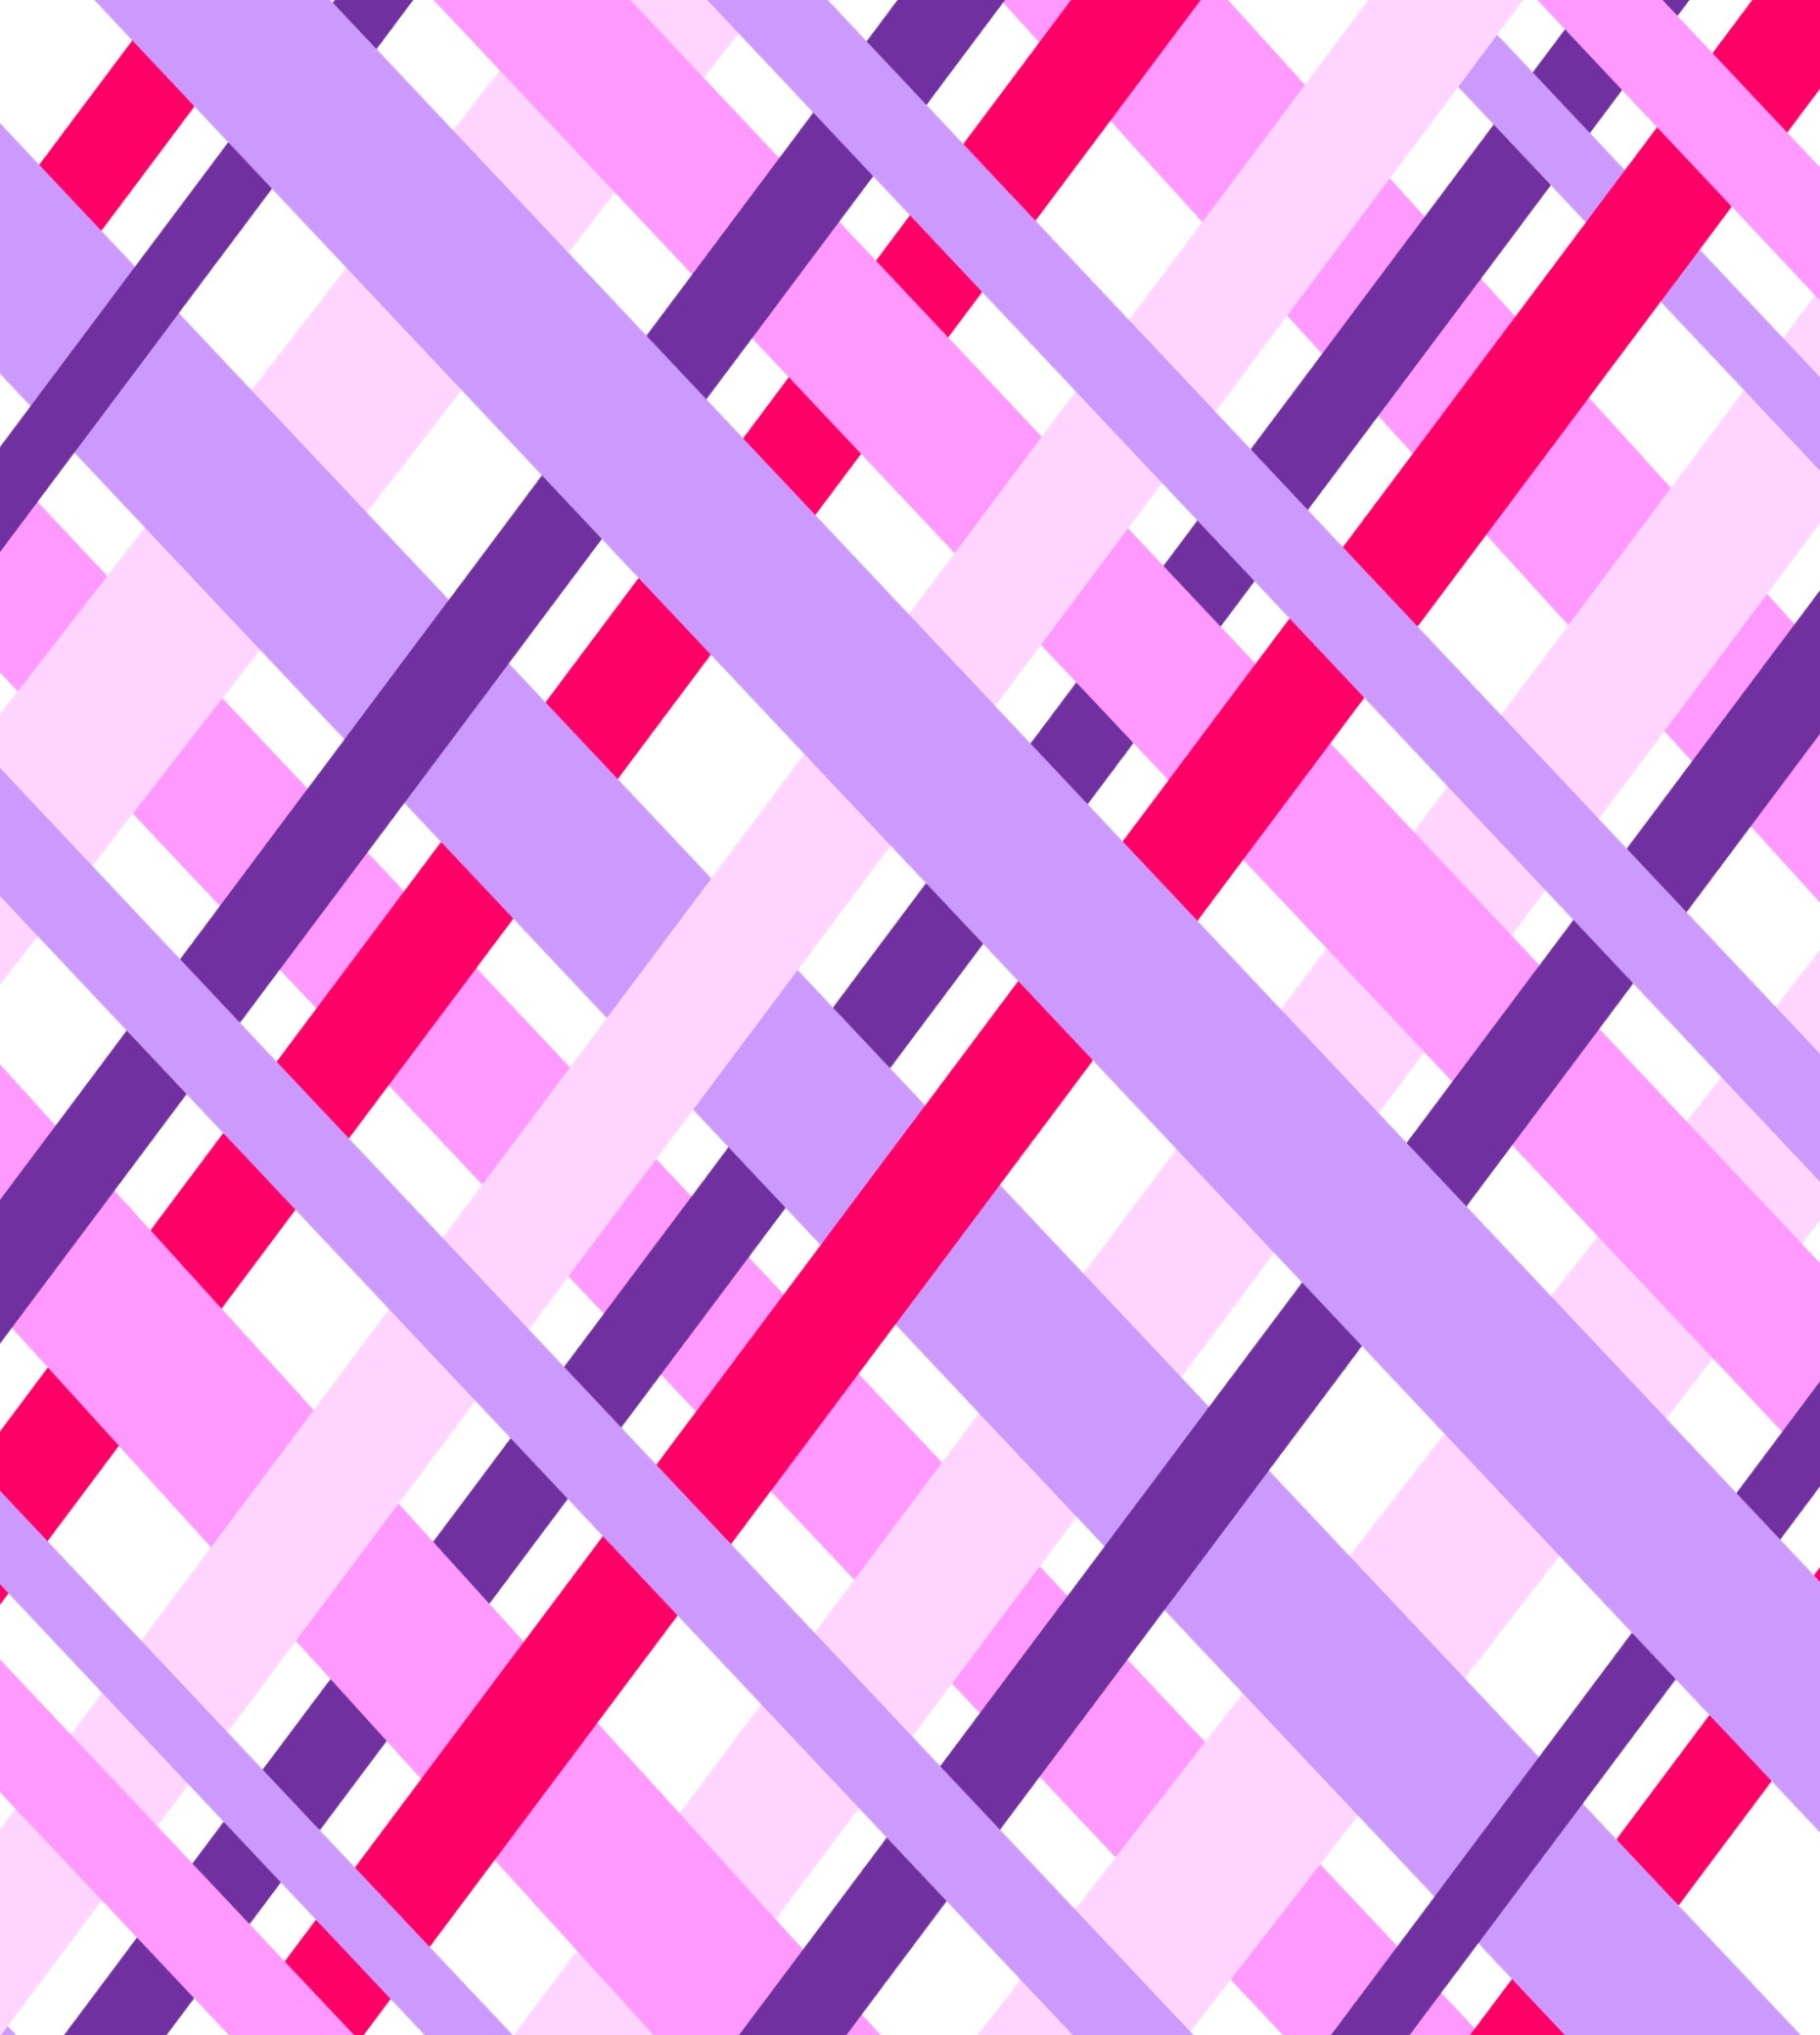 Diagonal gingham geometric stripes free image download